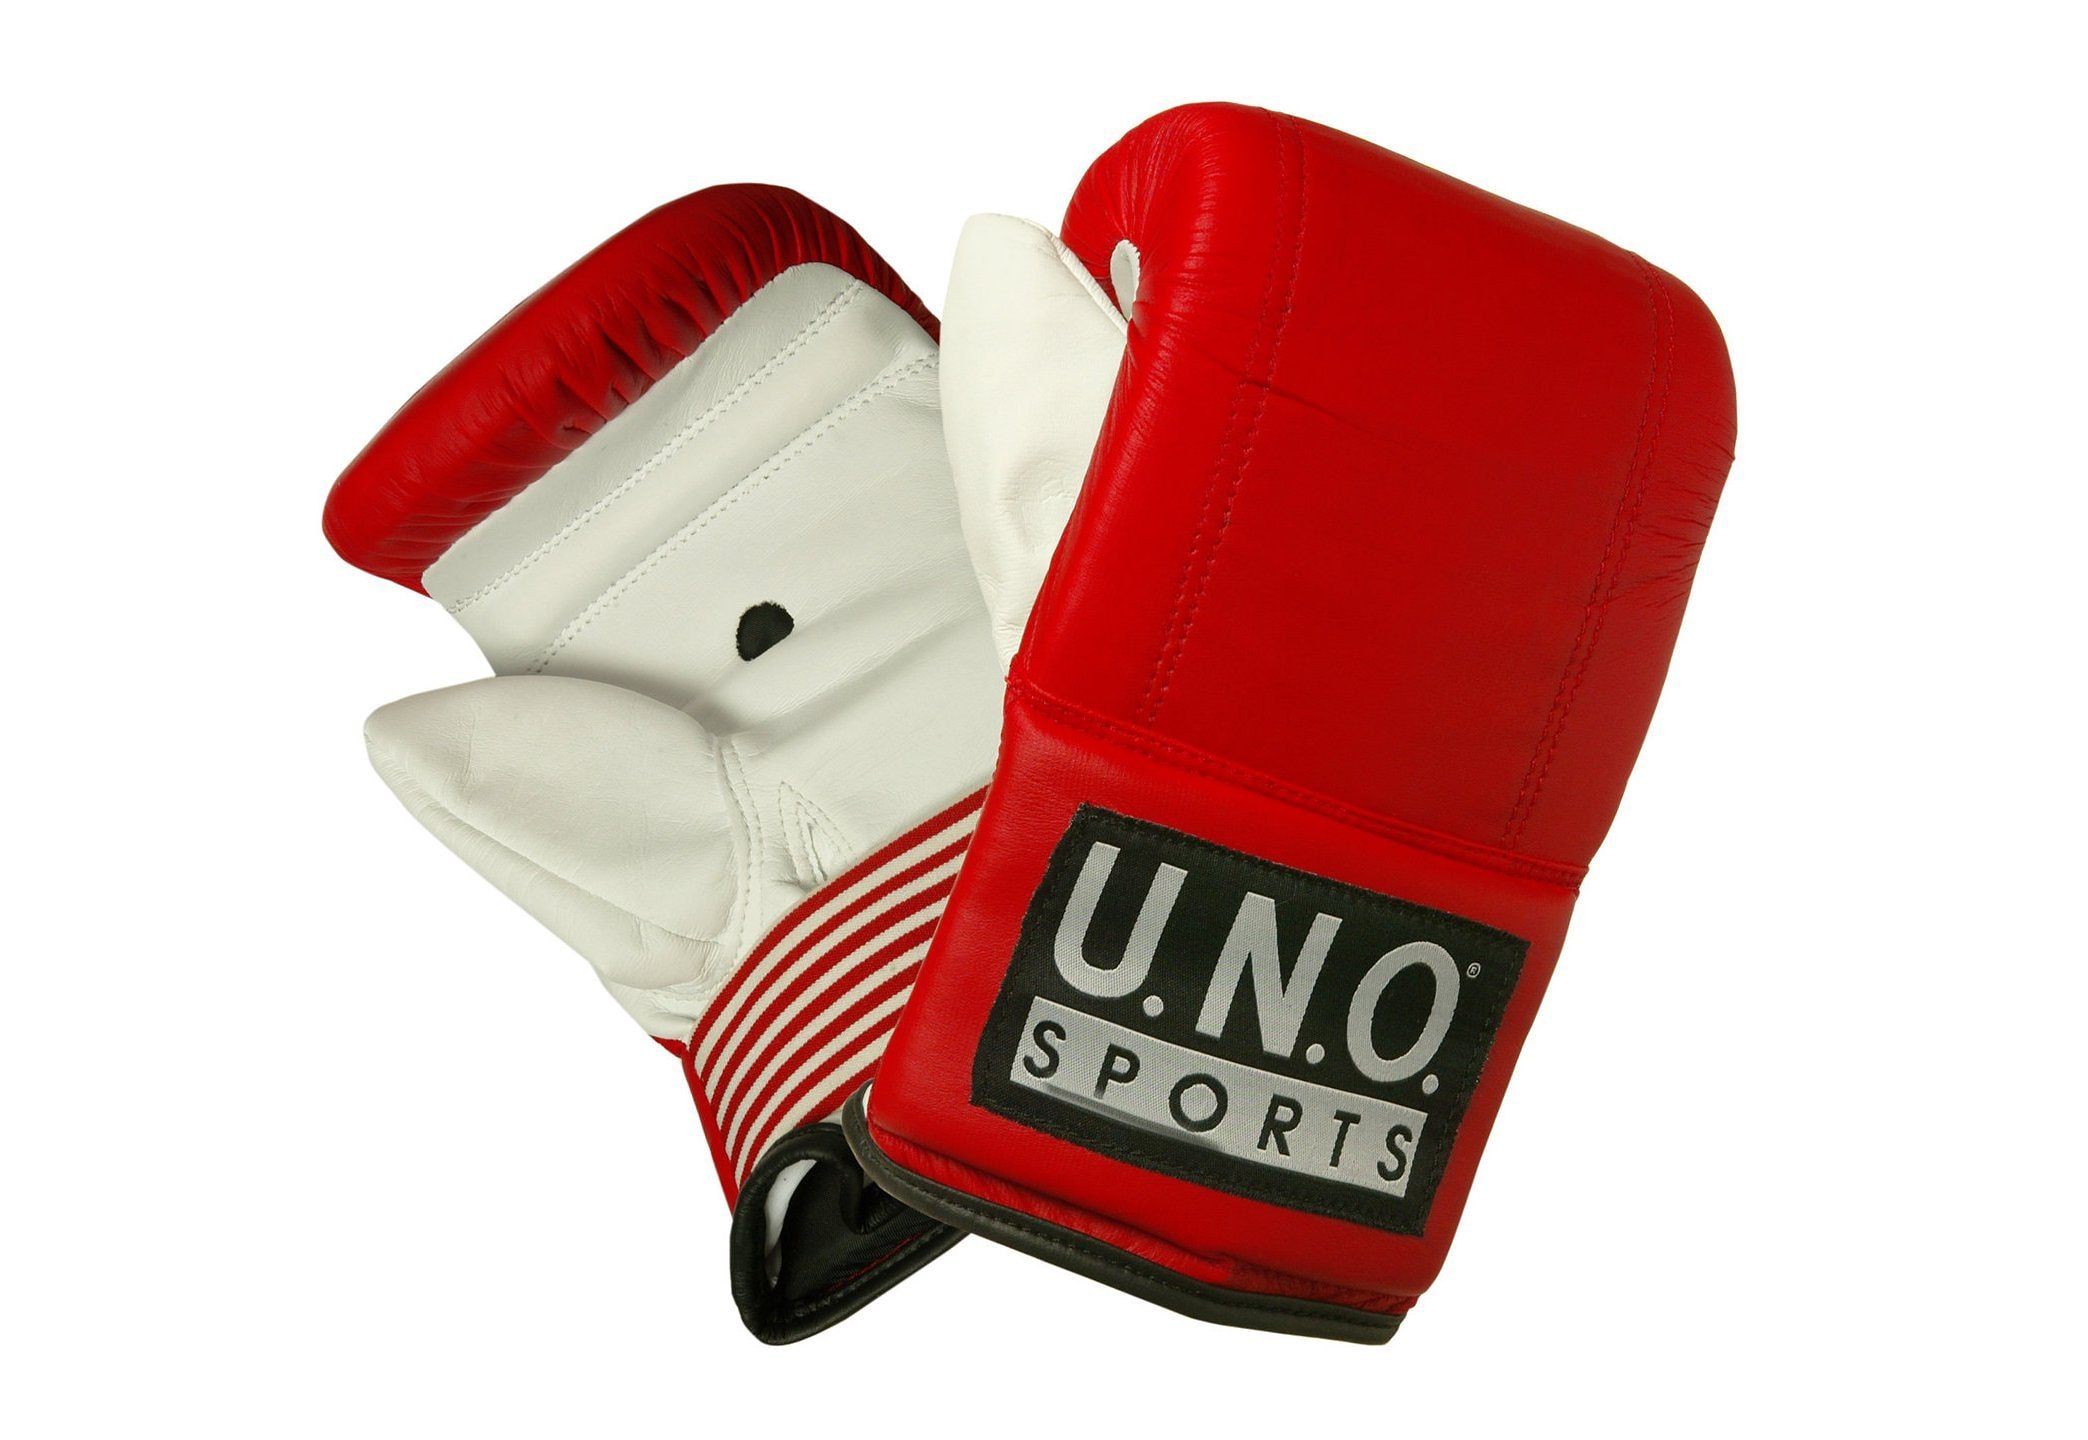 SPORTS günstig Boxhandschuhe kaufen »Light« U.N.O.